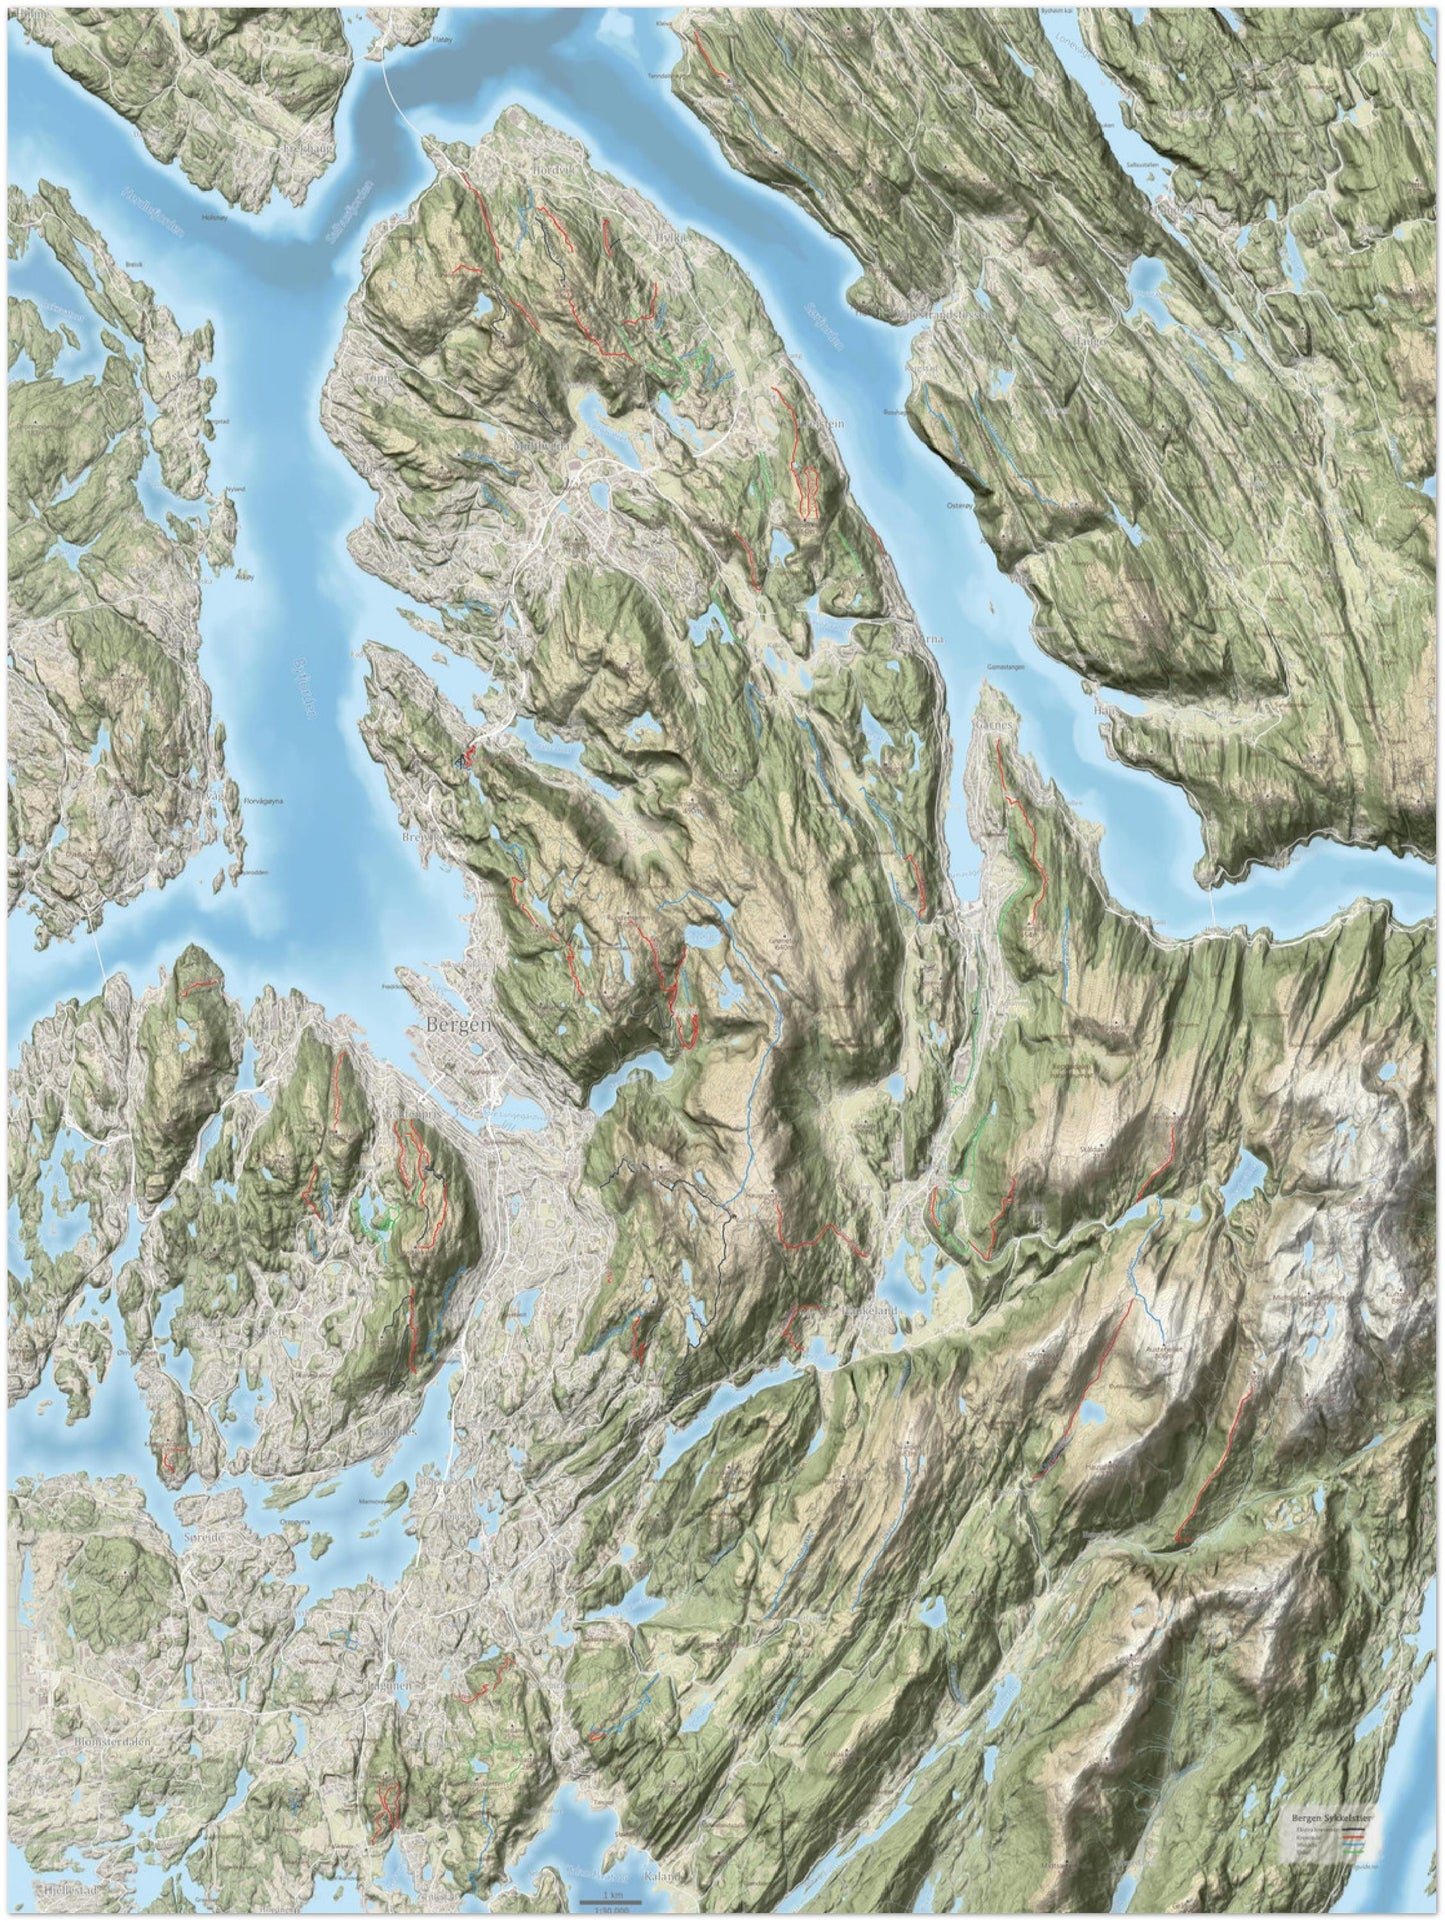 Bergen Stisykkelkart - Natur